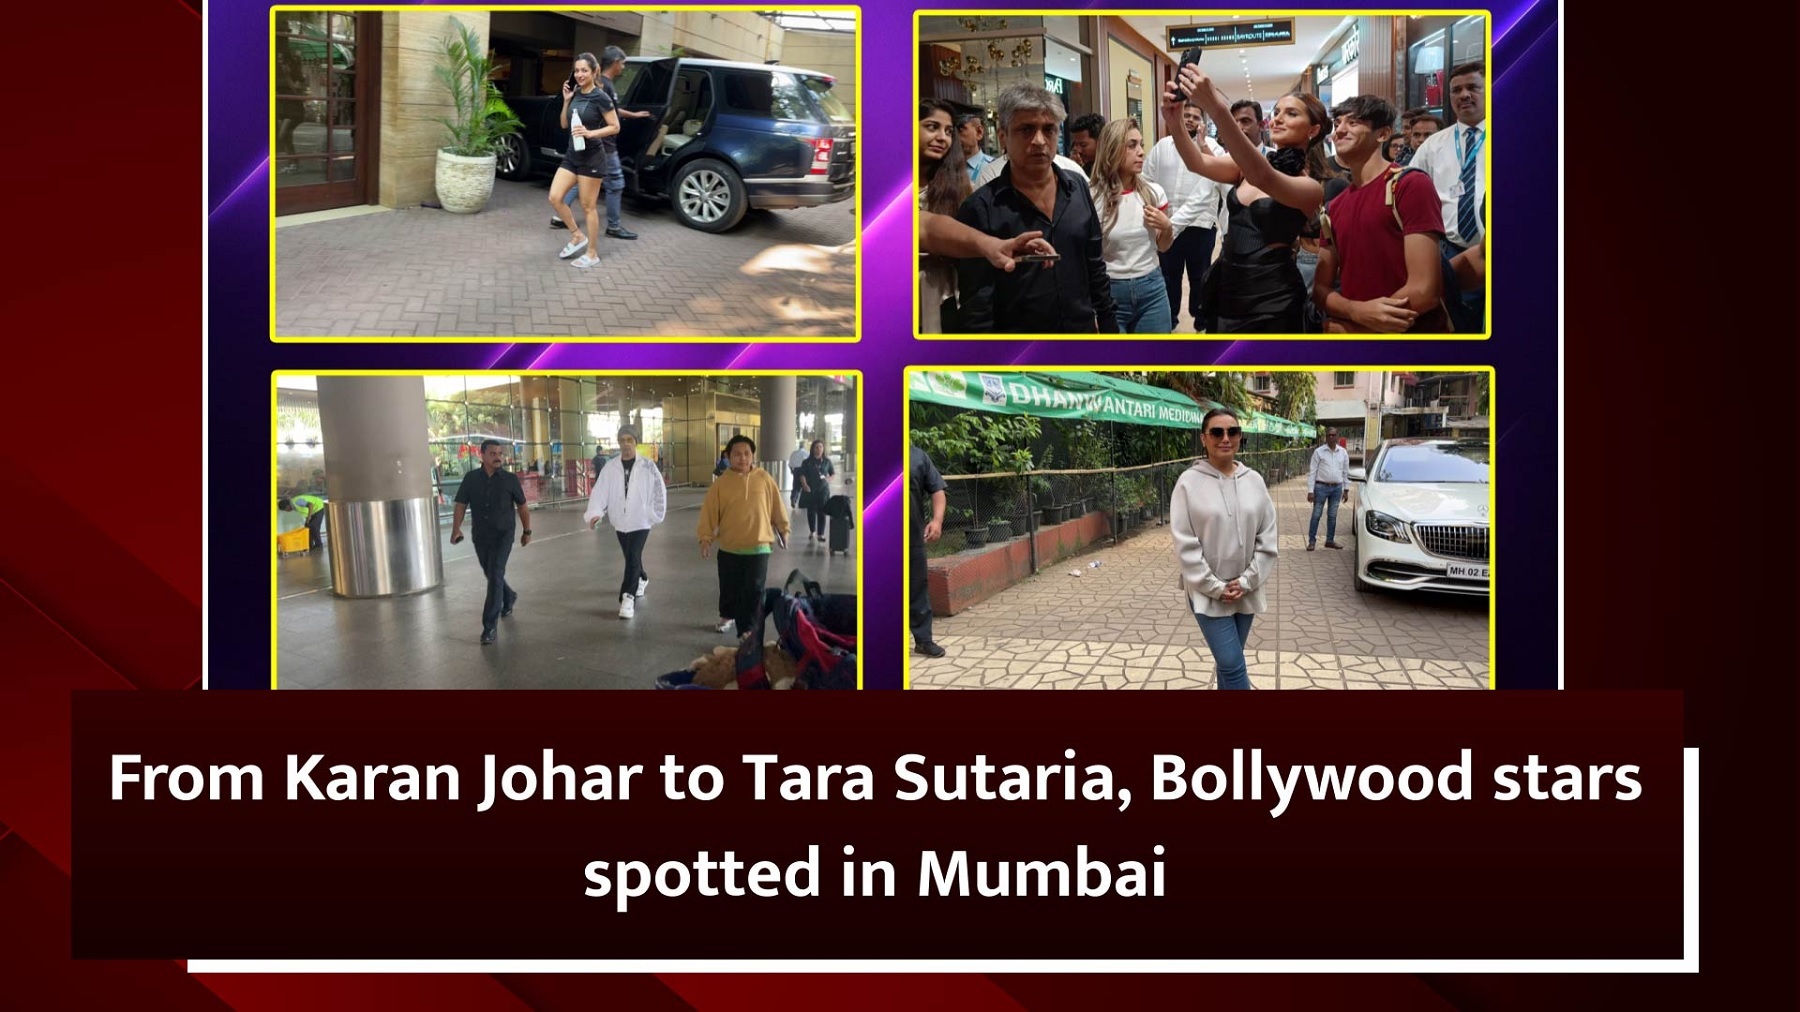 From Karan Johar to Tara Sutaria, Bollywood stars spotted in Mumbai 